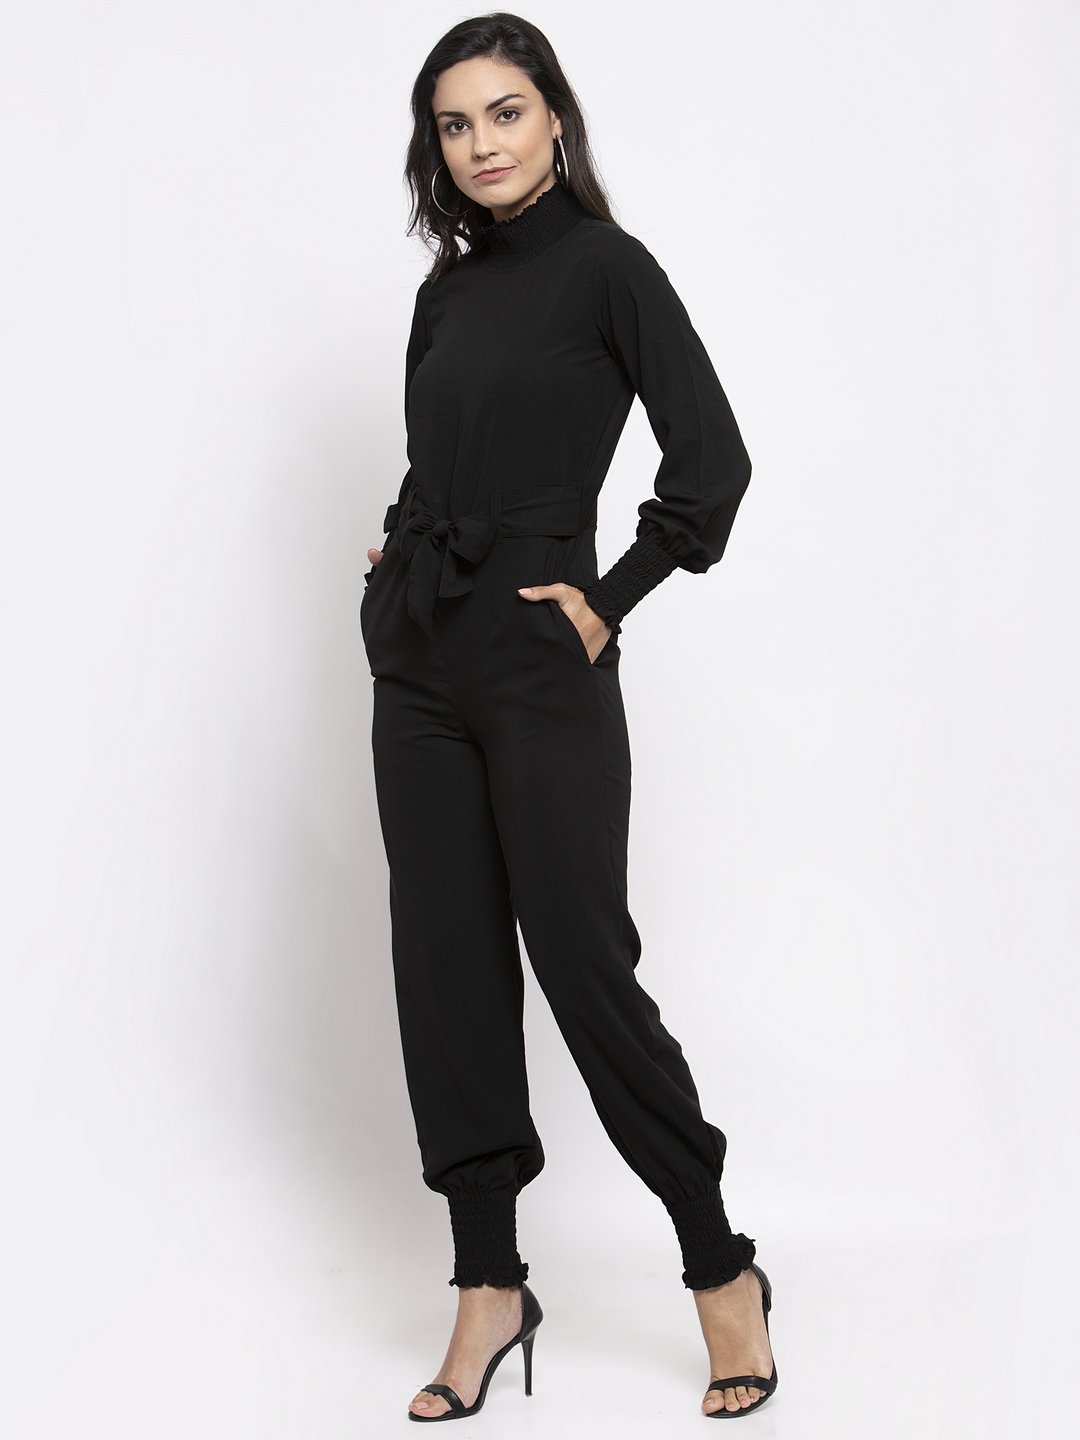 Women's Black Solid Basic Jumpsuit - Jompers